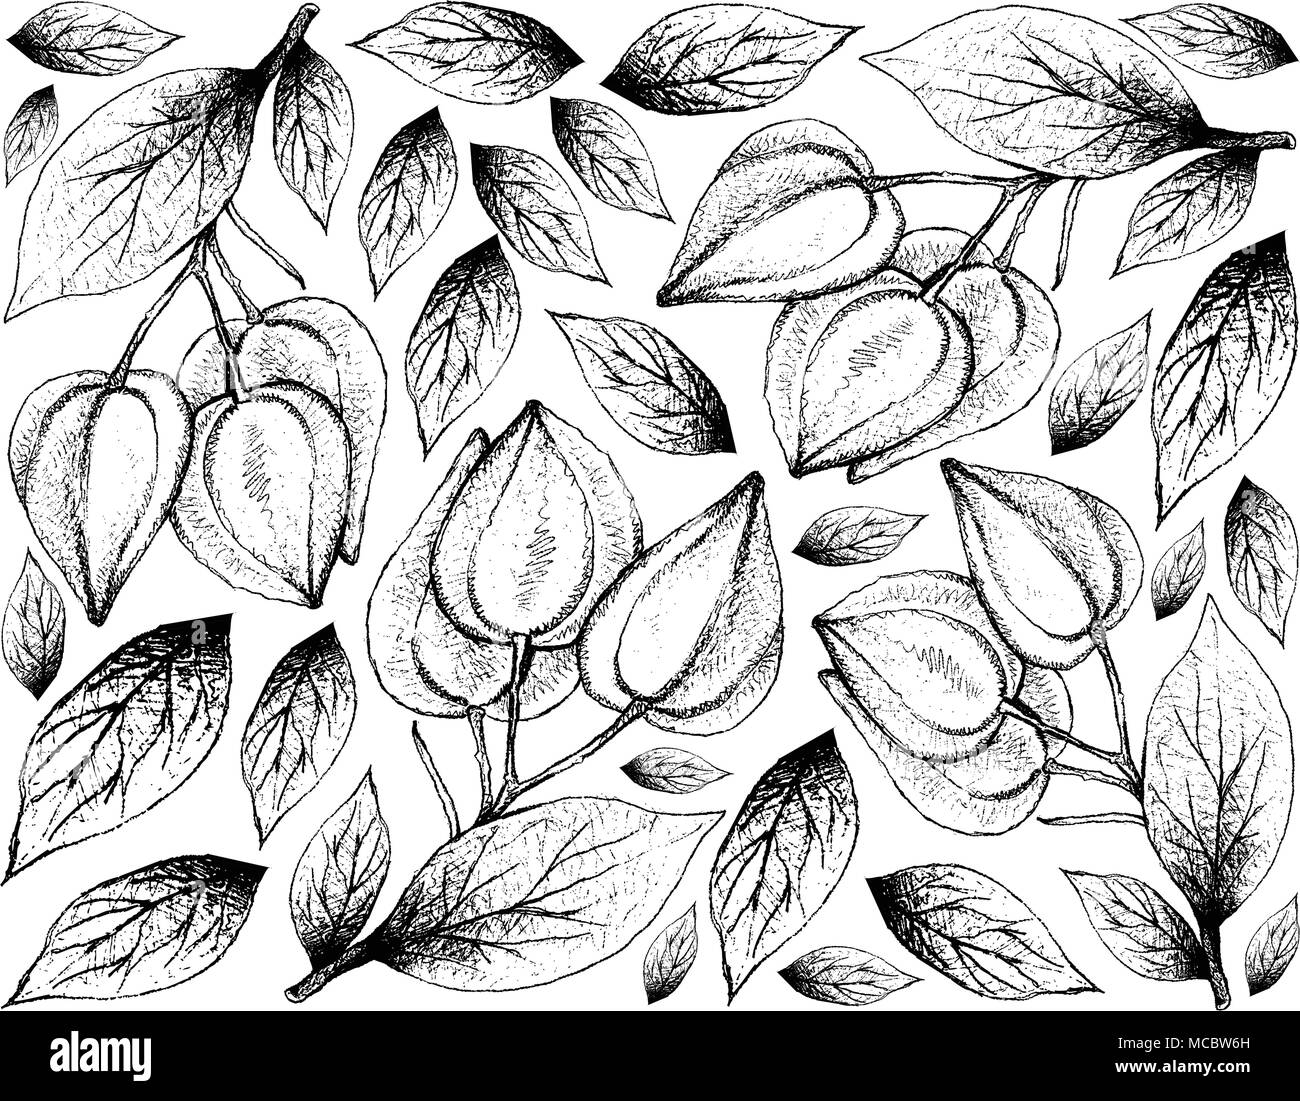 Fruit, Illustration Wallpaper Background of Hand Drawn Sketch of Fresh Belimbing Merah, Belimbing Hutan or Baccaurea Angulata Fruits. Stock Vector